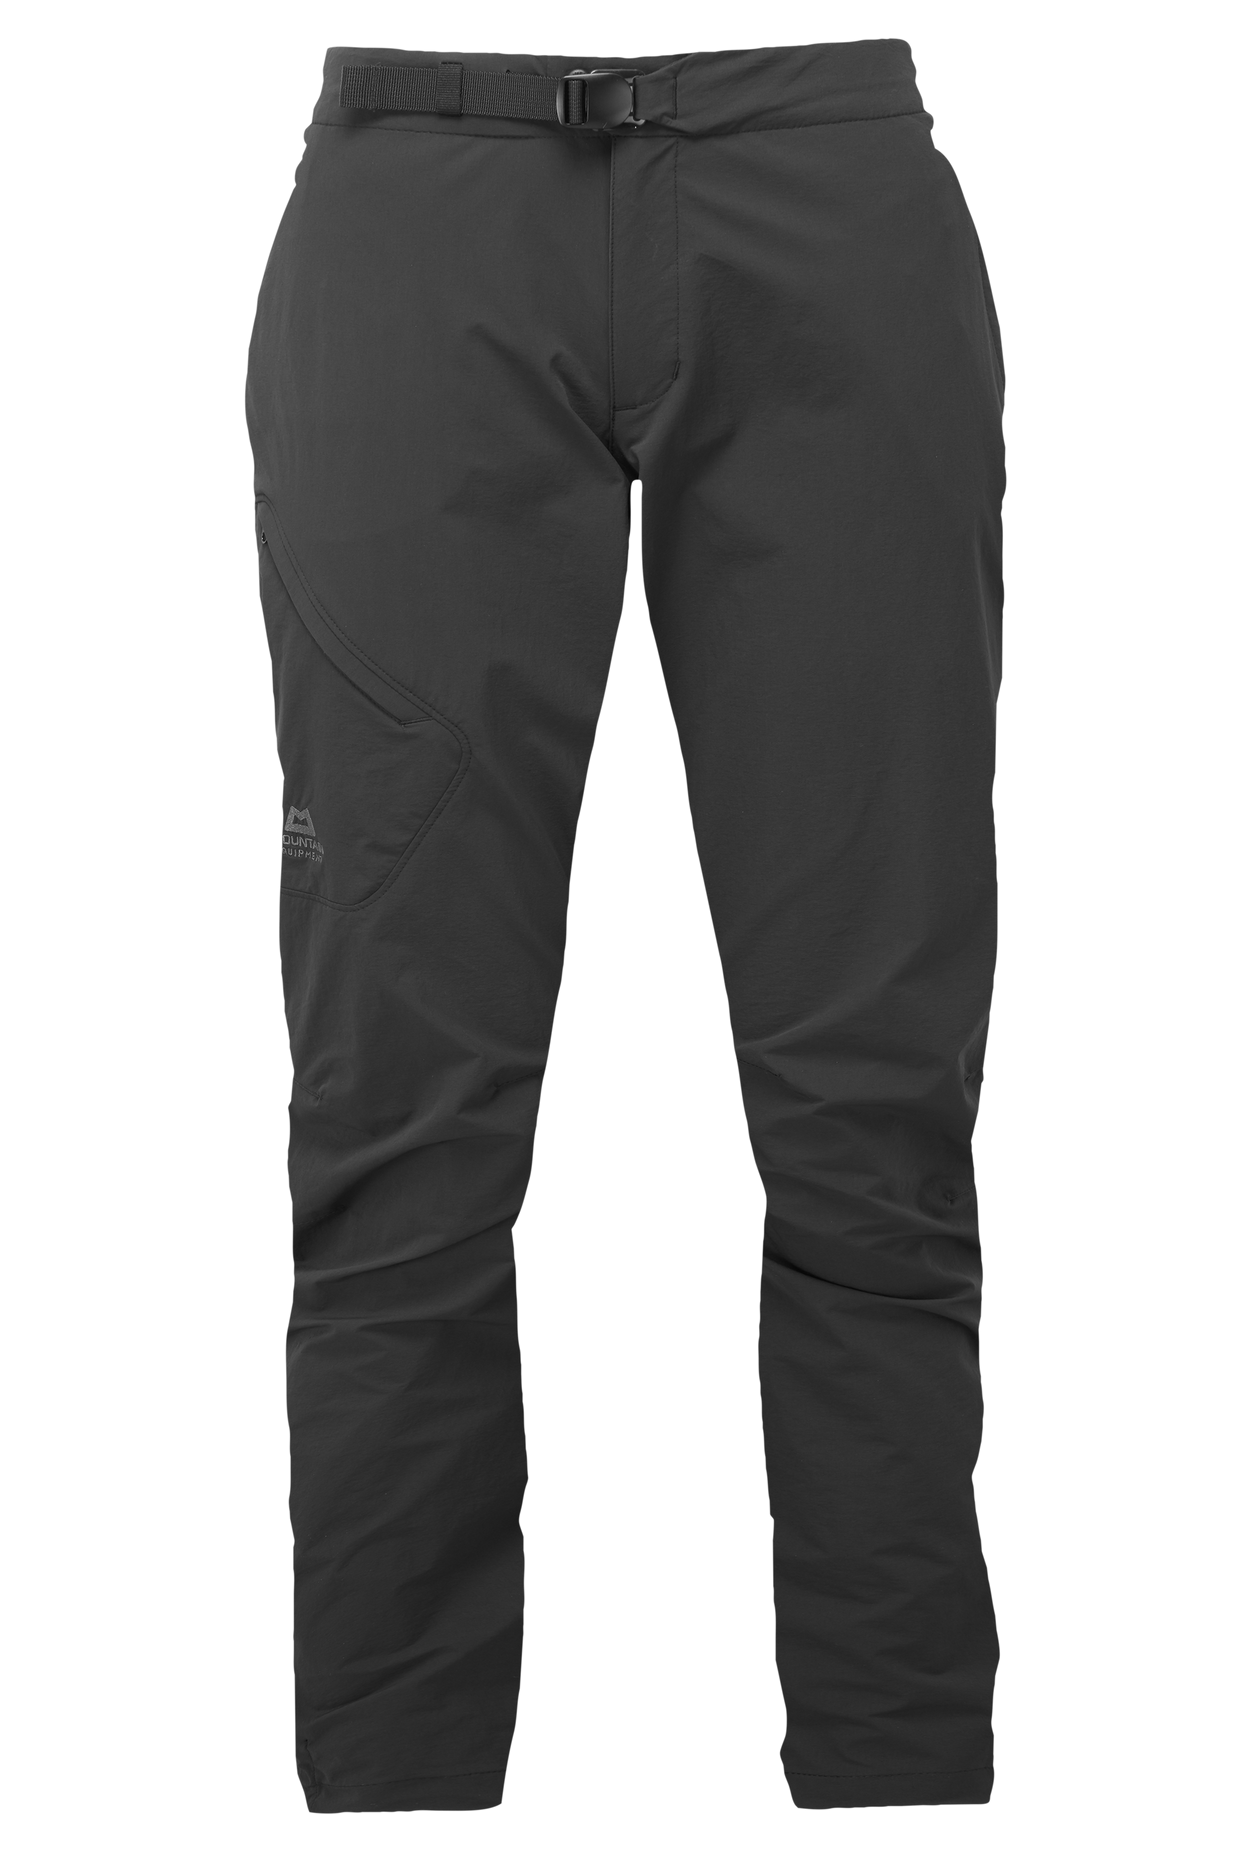 Mountain equipment dámské softshellové kalhoty Comici Wmns Pant - zkrácené Barva: black, Velikost: M